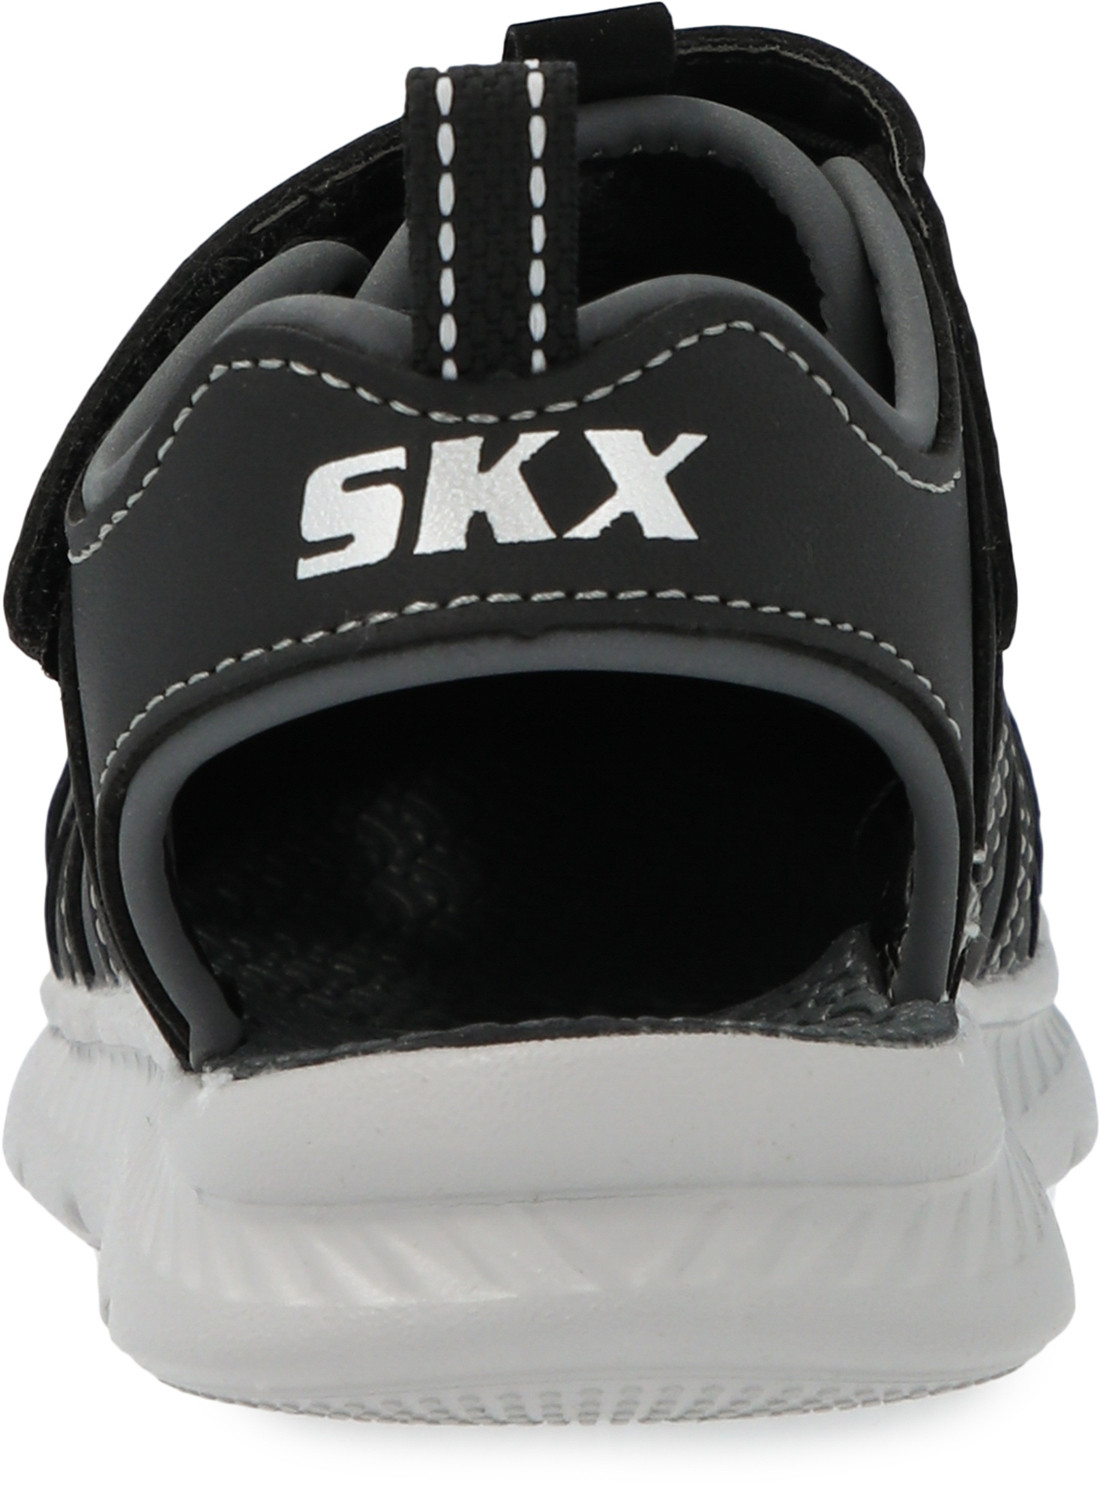 Сандалии для мальчиков Skechers C_Flex Sandal 2.0